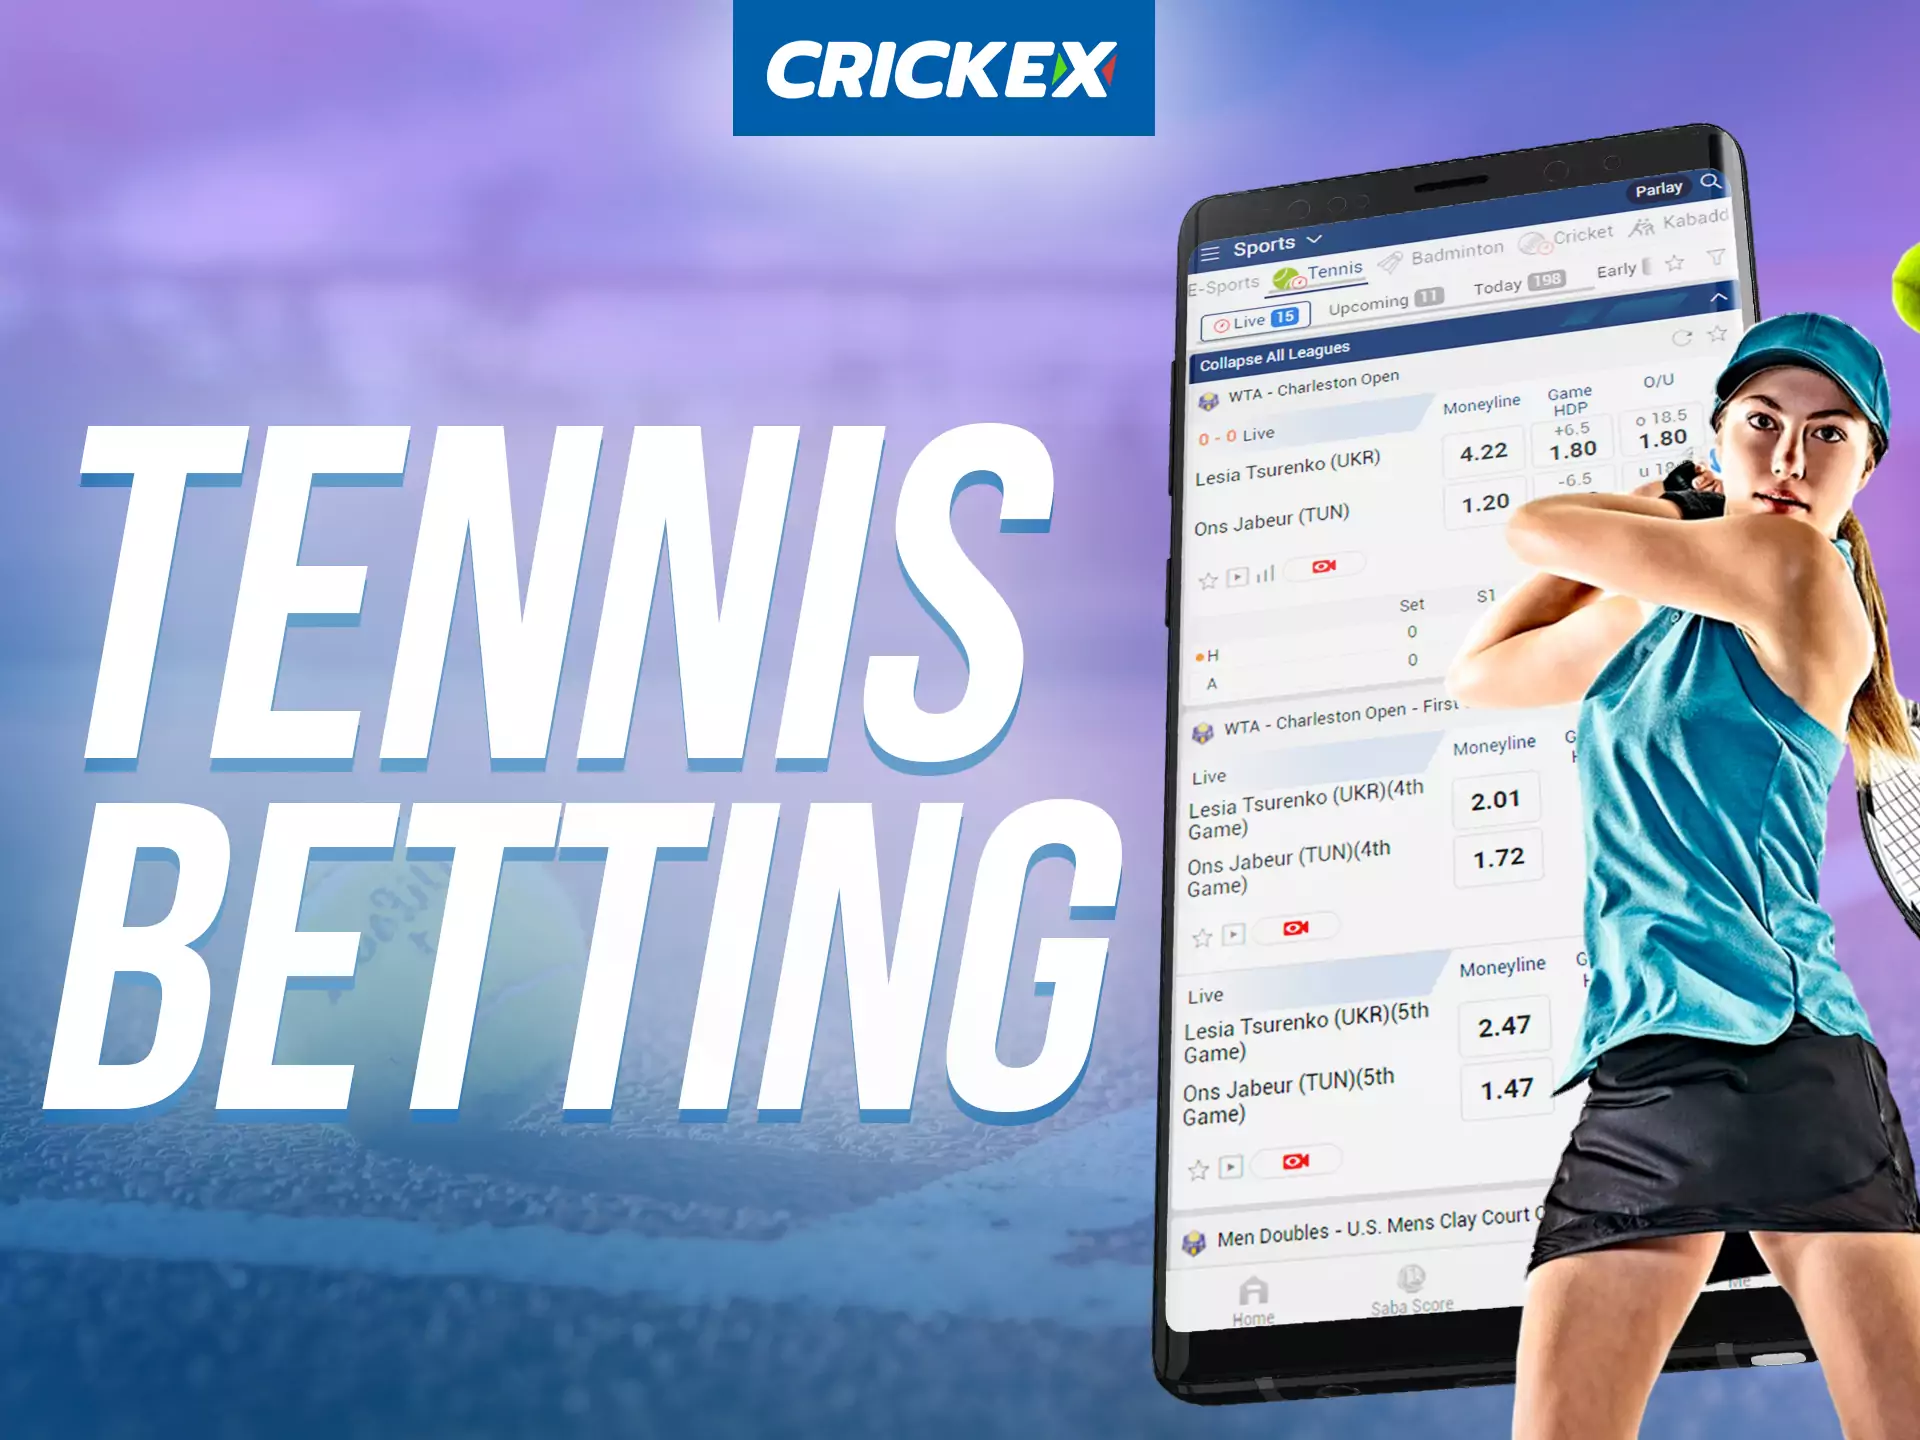 Bet on tennis in the Crickex app.